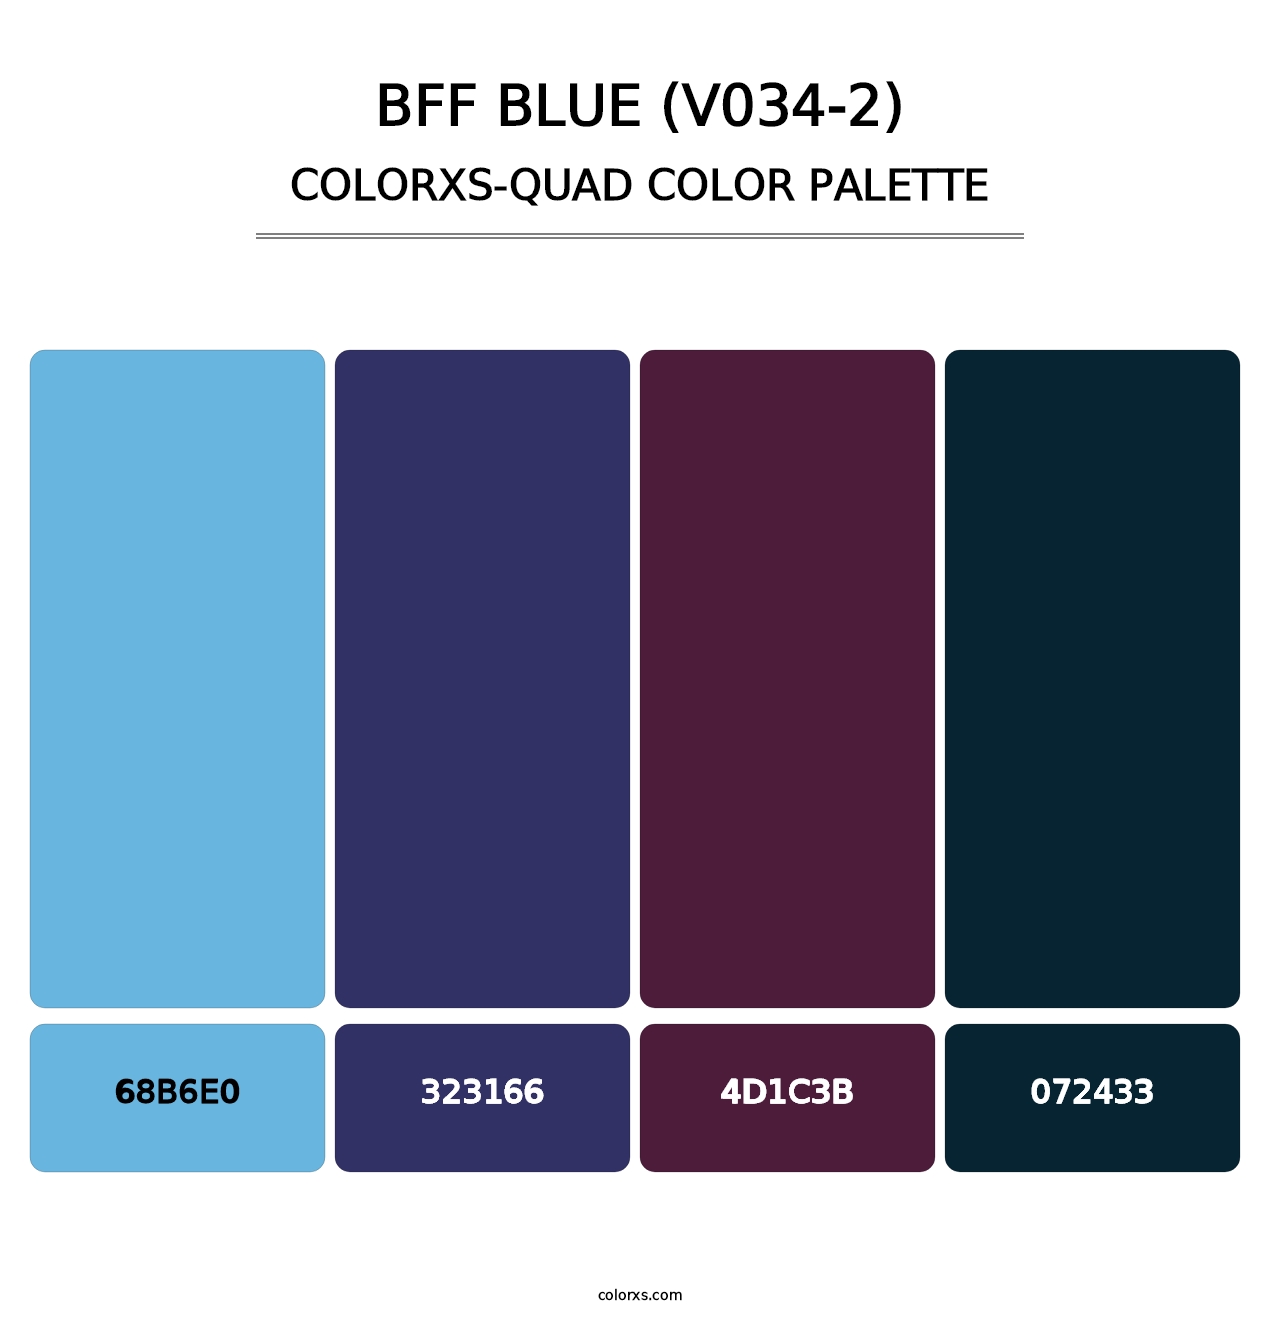 BFF Blue (V034-2) - Colorxs Quad Palette